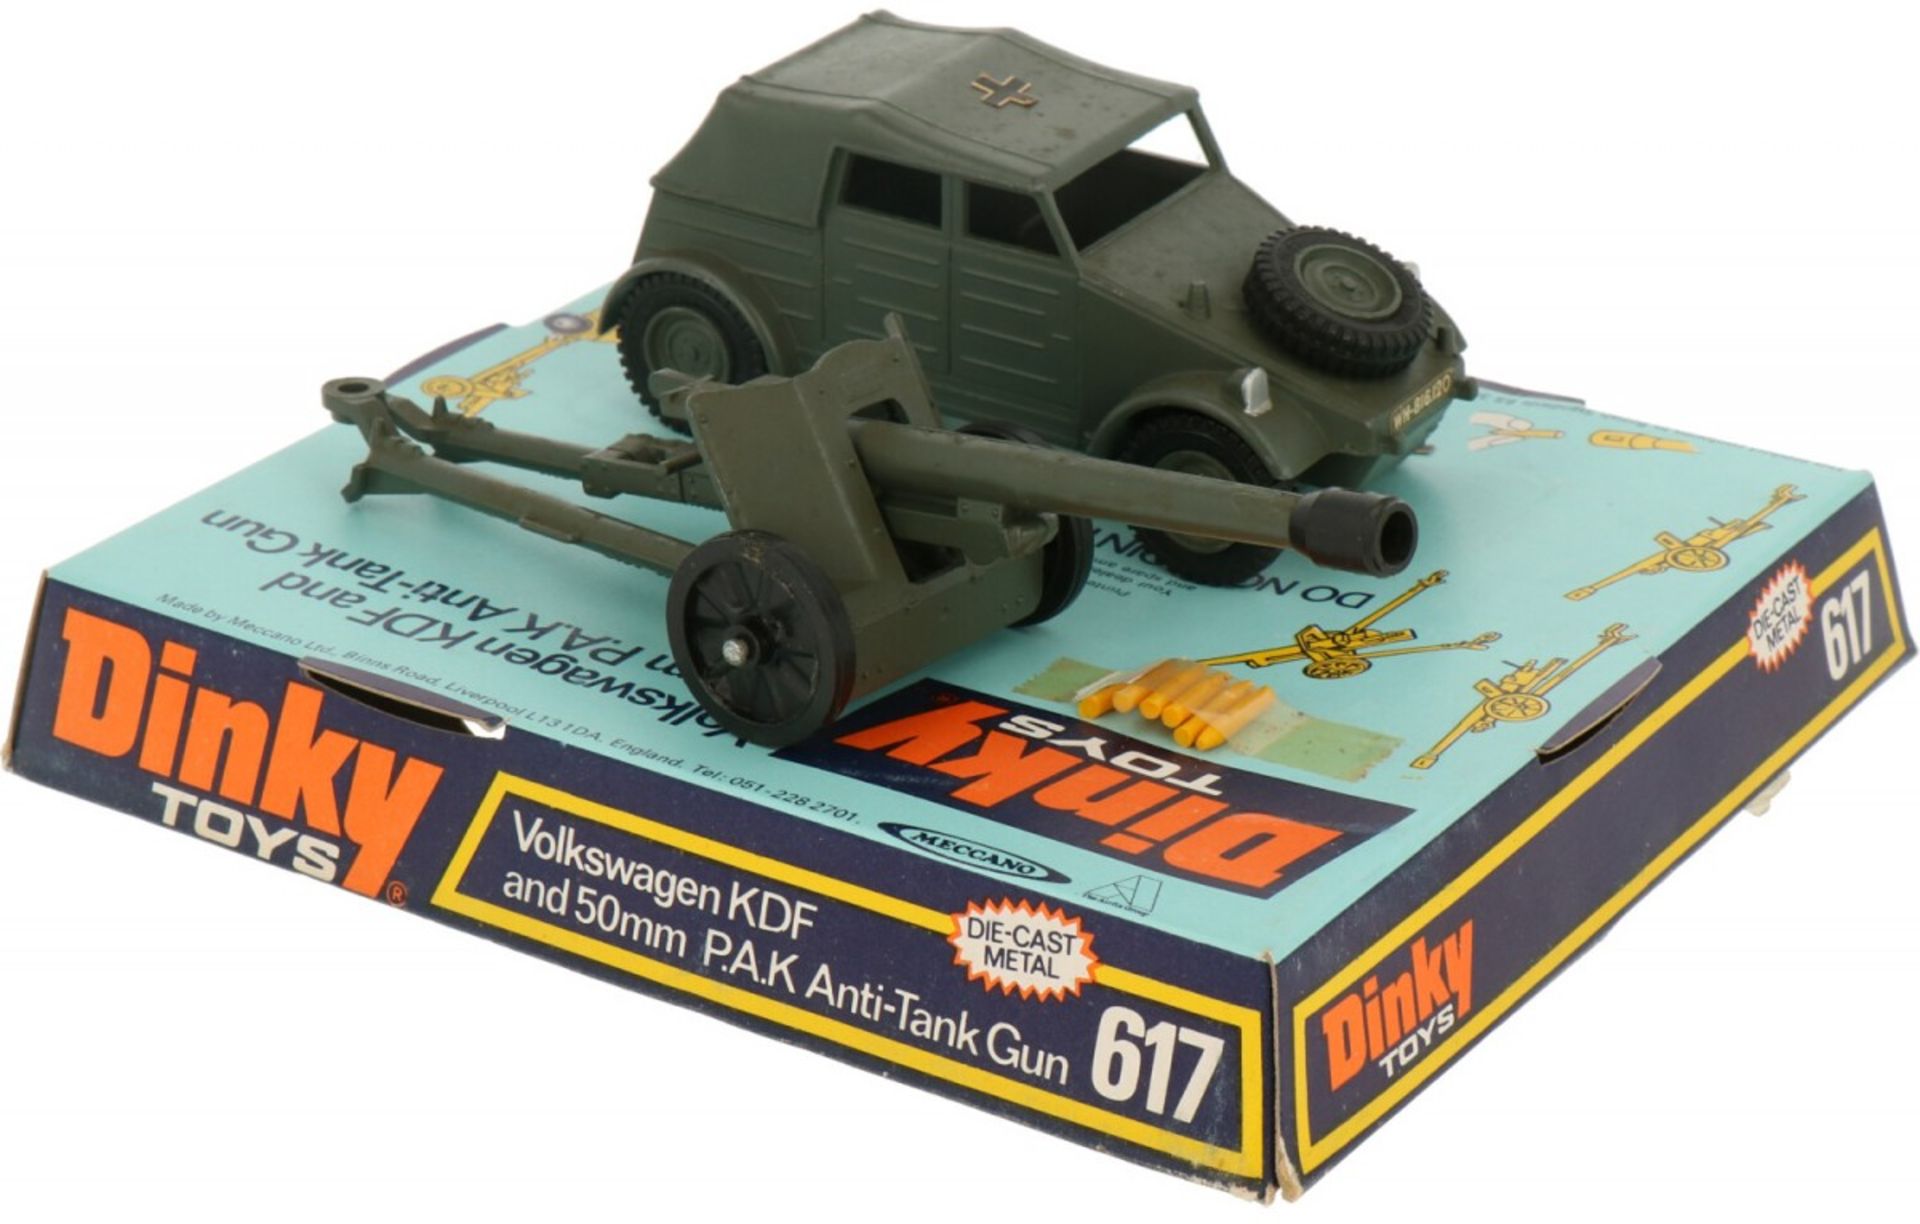 Dinky toys 617 Volkswagen KDF with 50mm P.A.K. anti tank gun